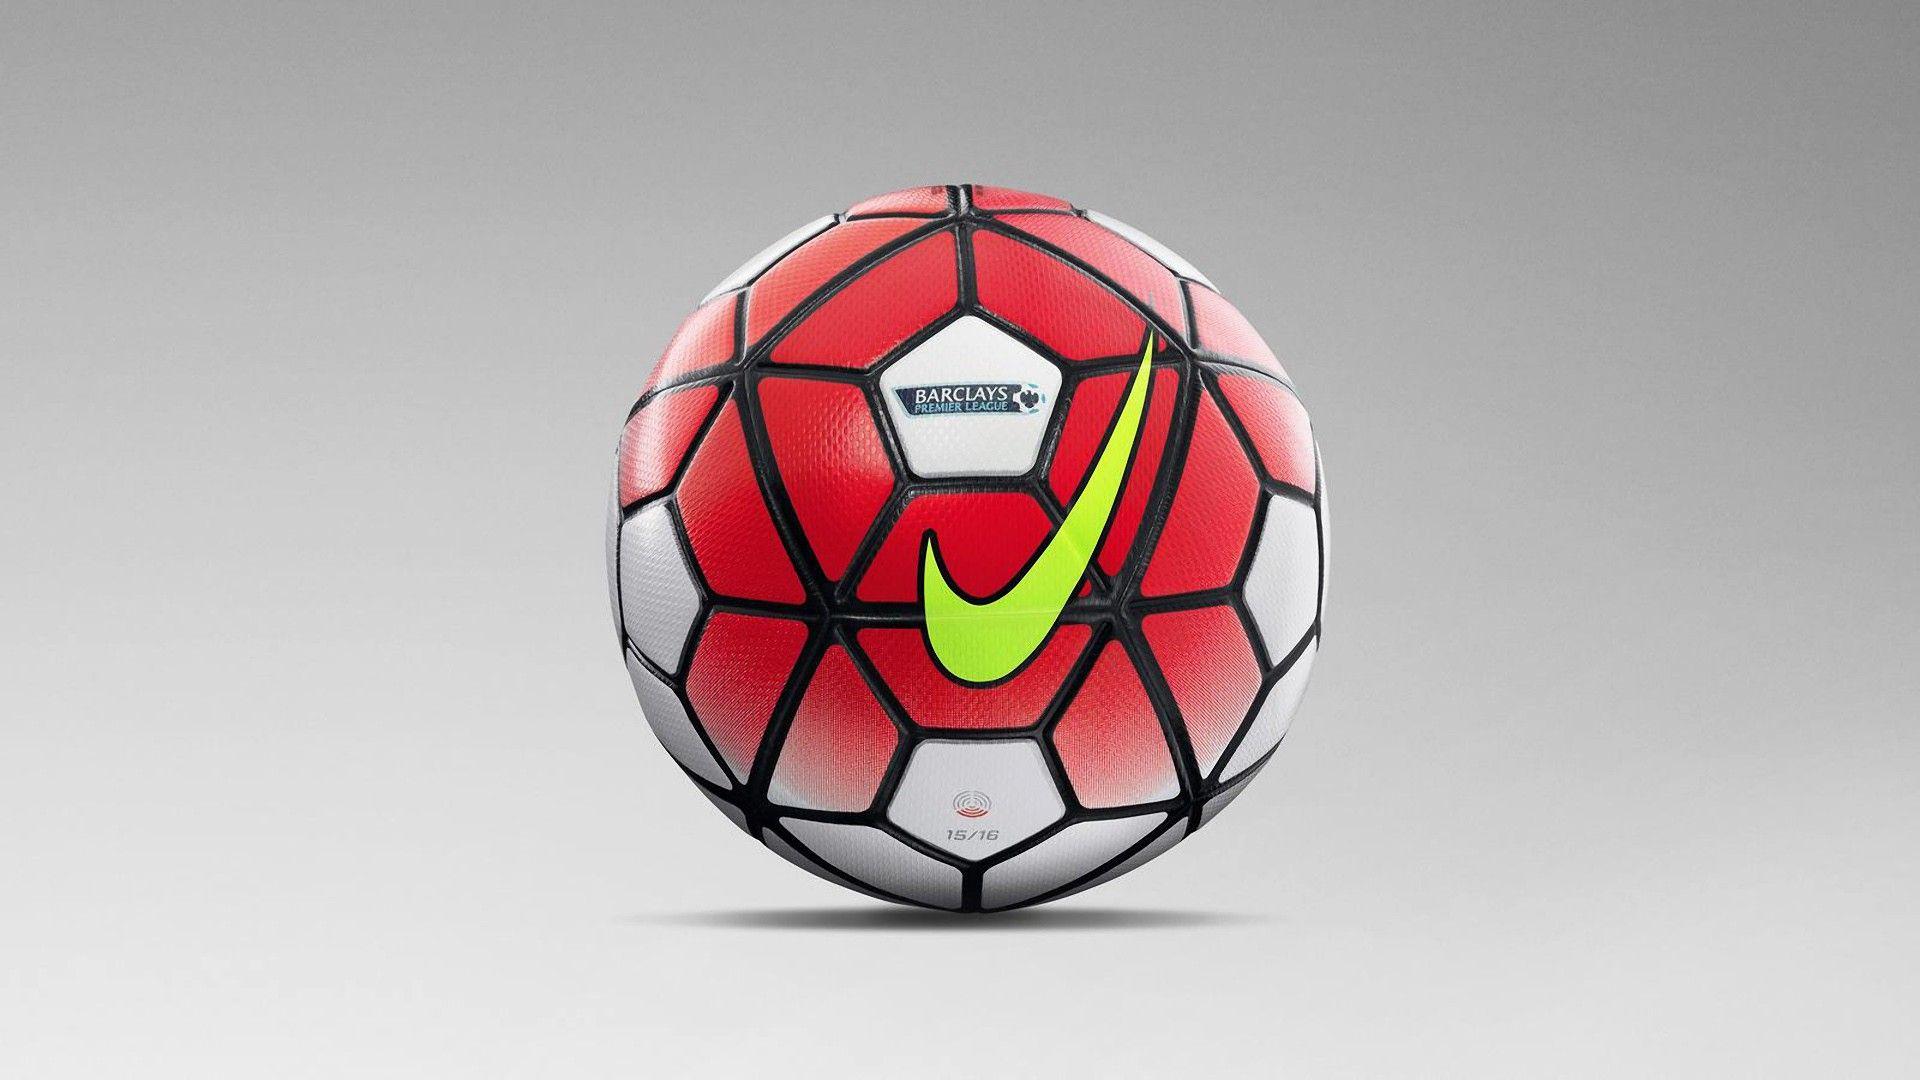 Nike Ordem 3 Barclays Premier League 2015 2016 Ball Wallpaper Free